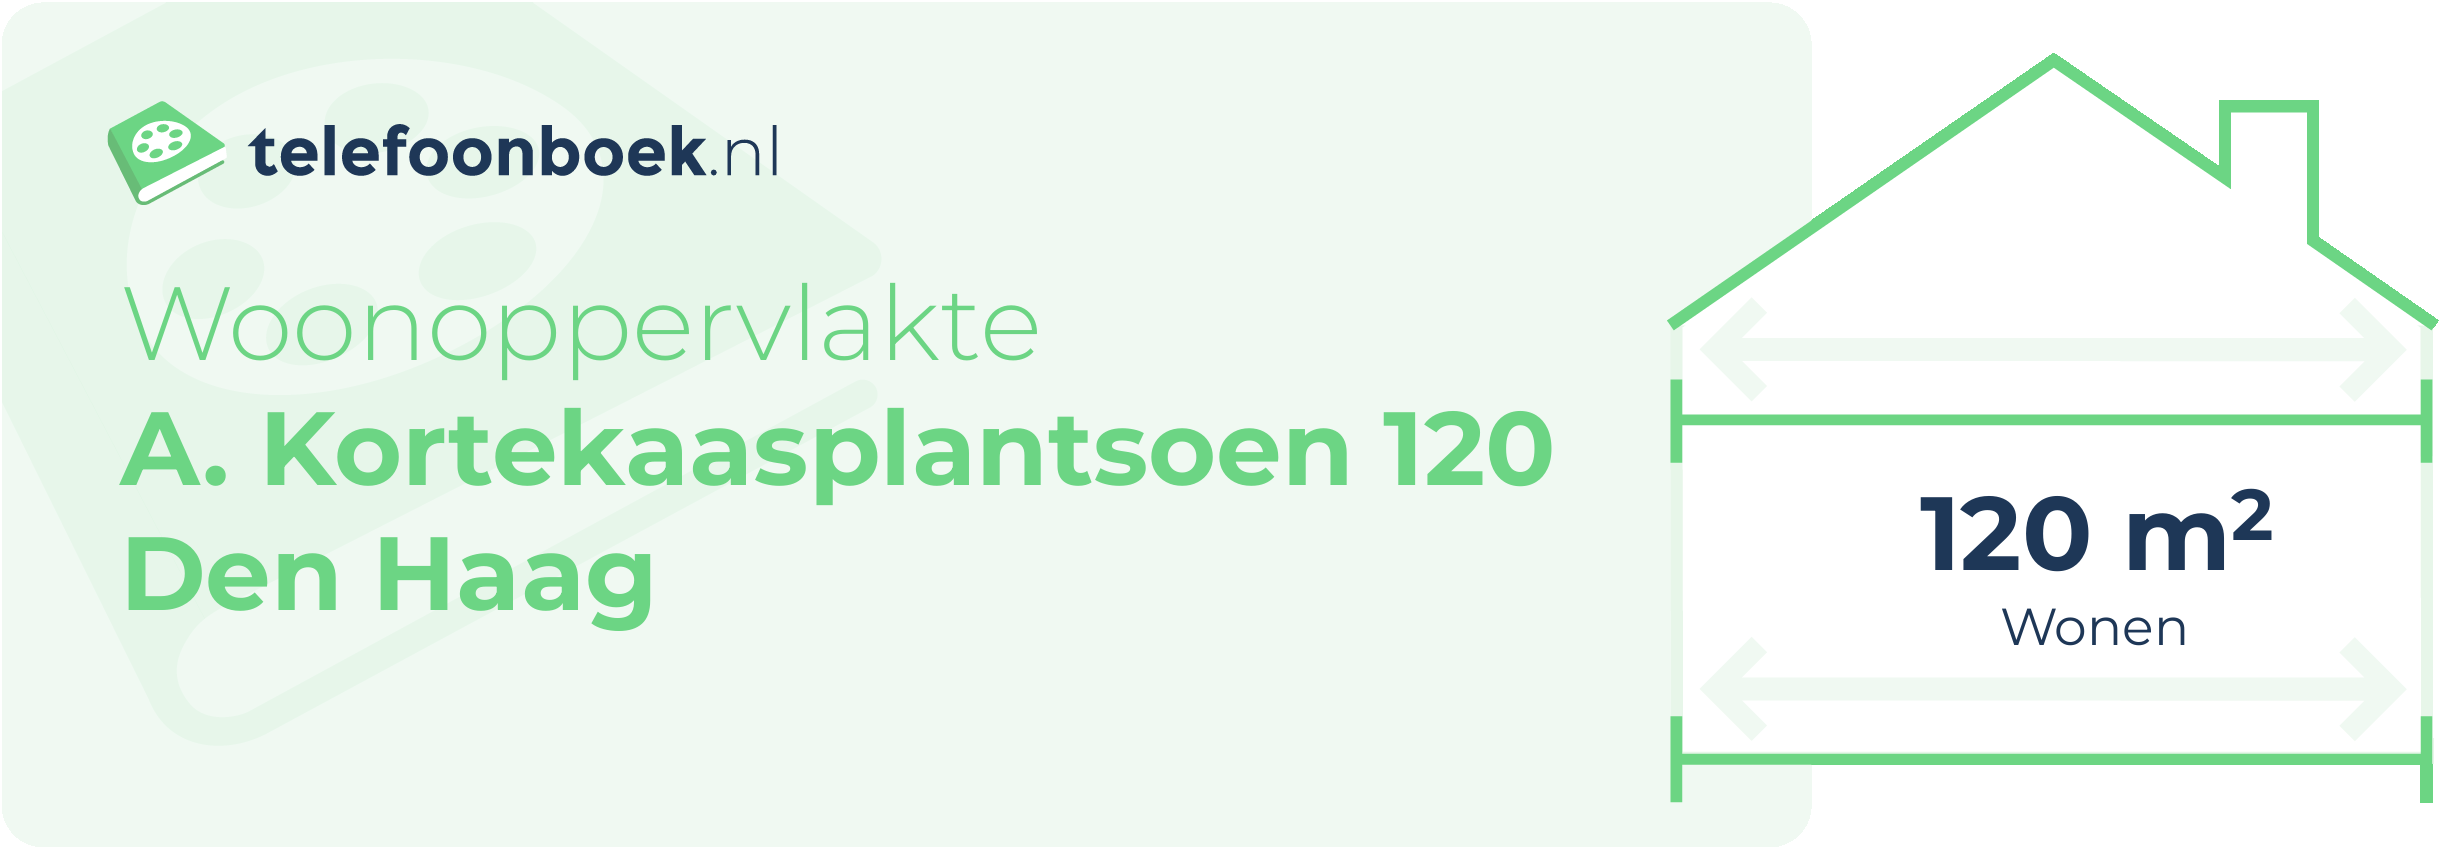 Woonoppervlakte A. Kortekaasplantsoen 120 Den Haag